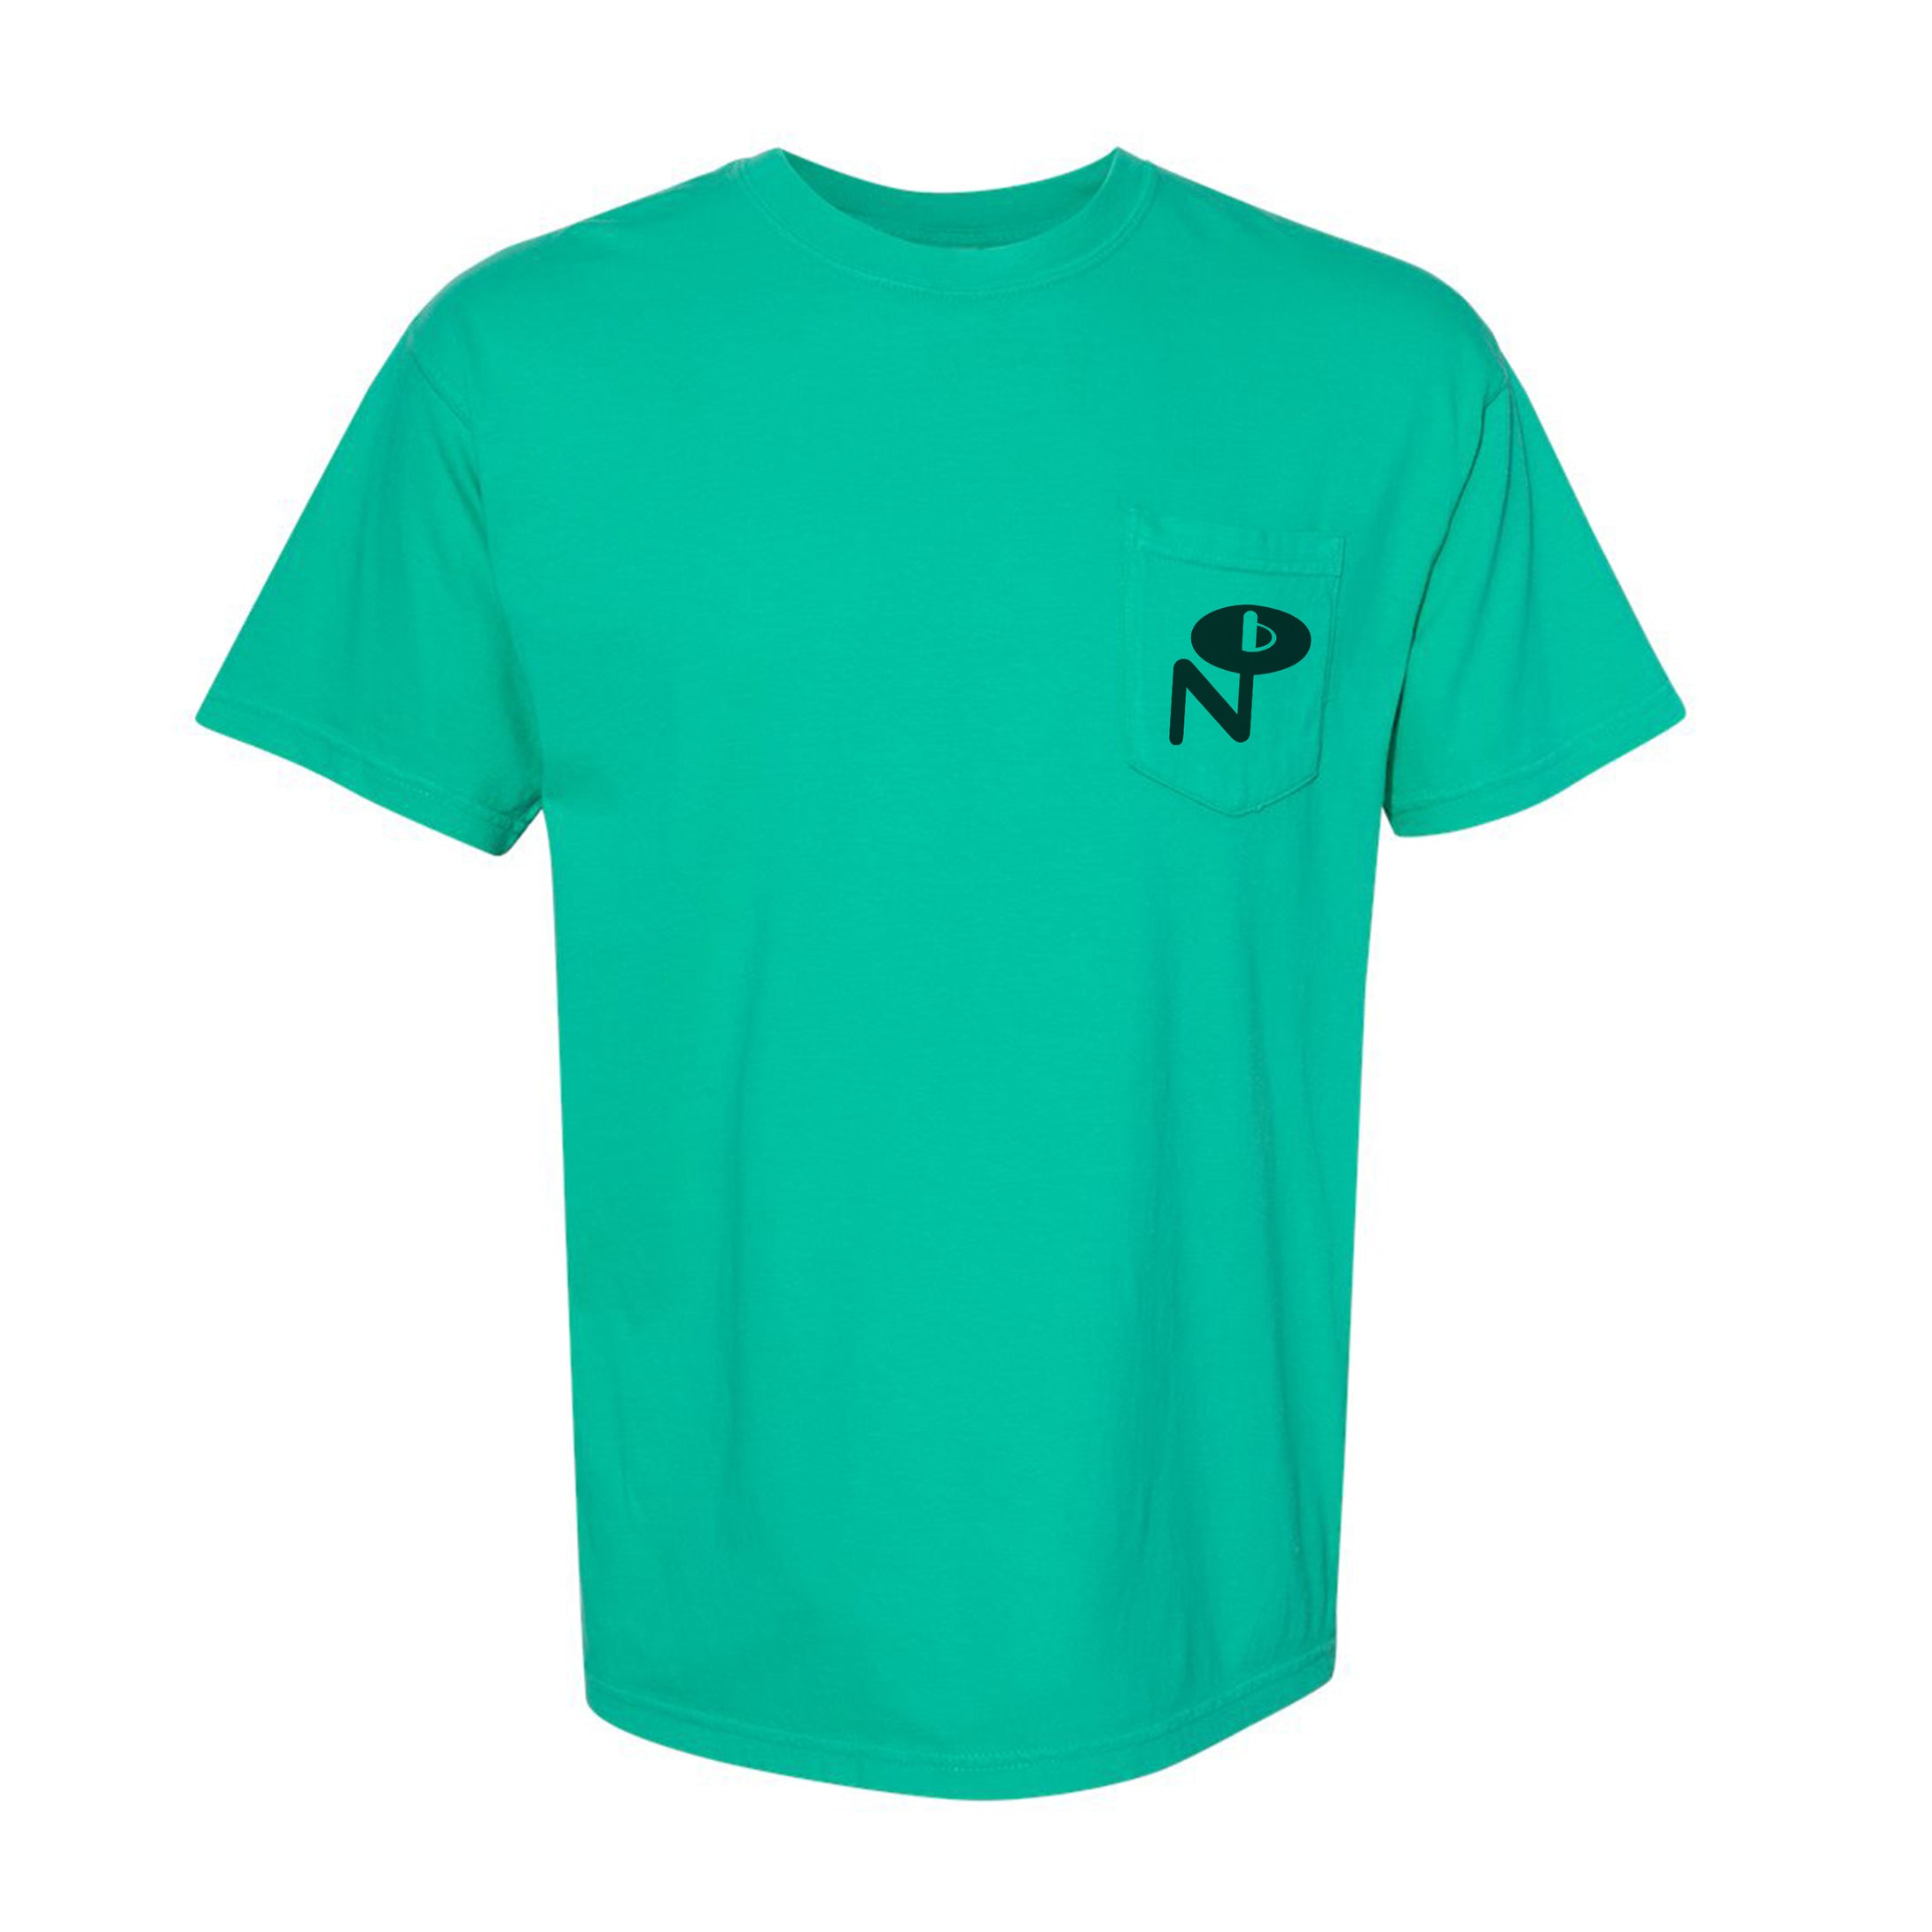 Island Green Pocket T-shirt